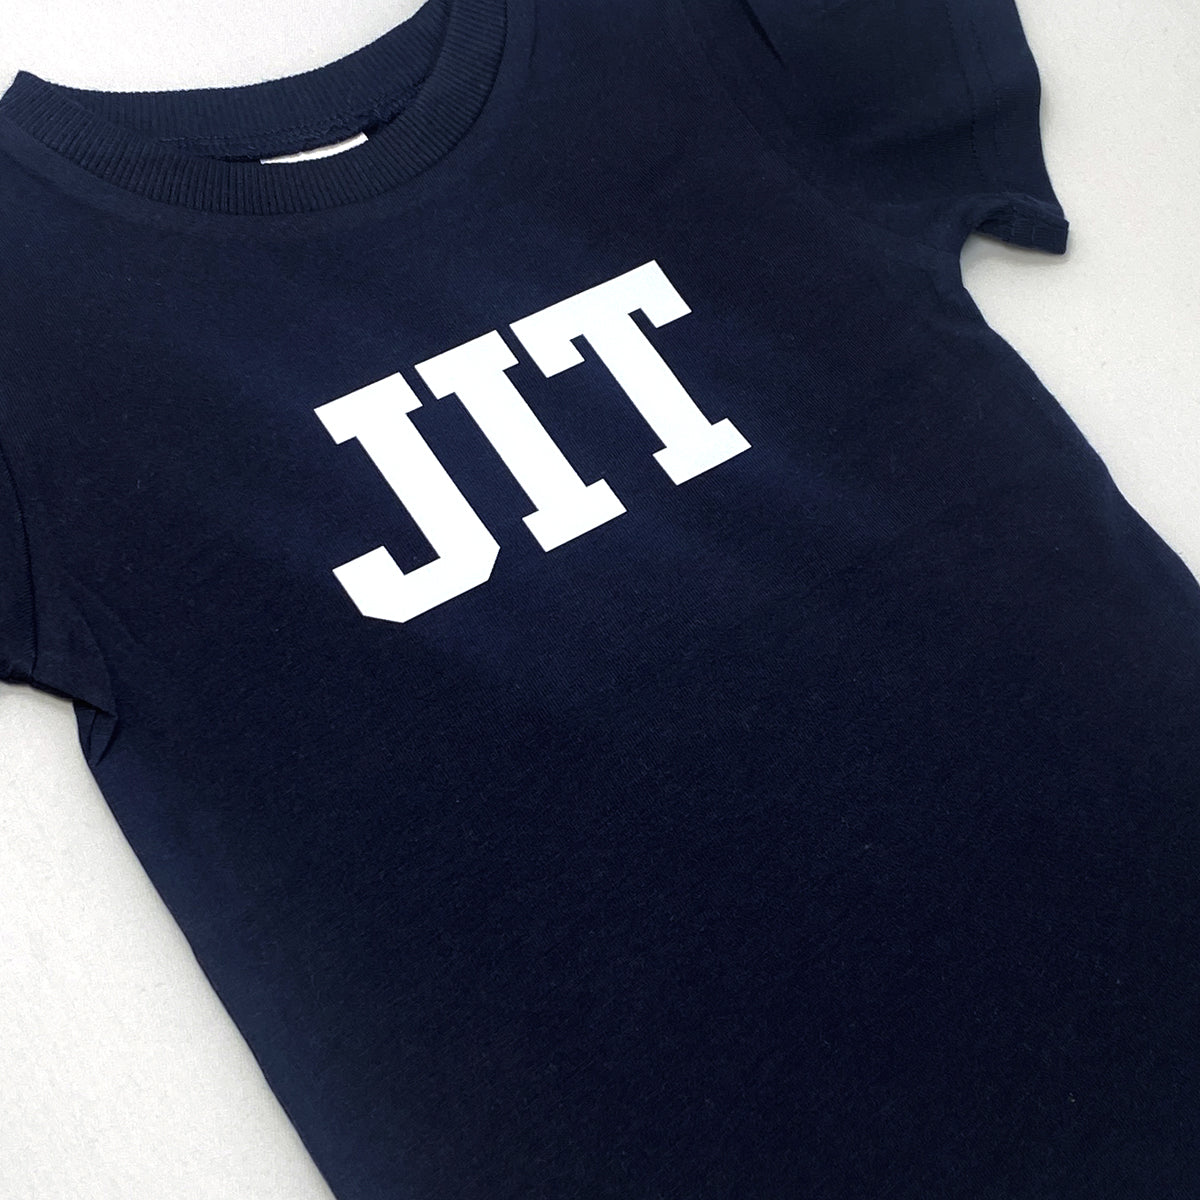 Le' JIT T-Shirt (Navy)